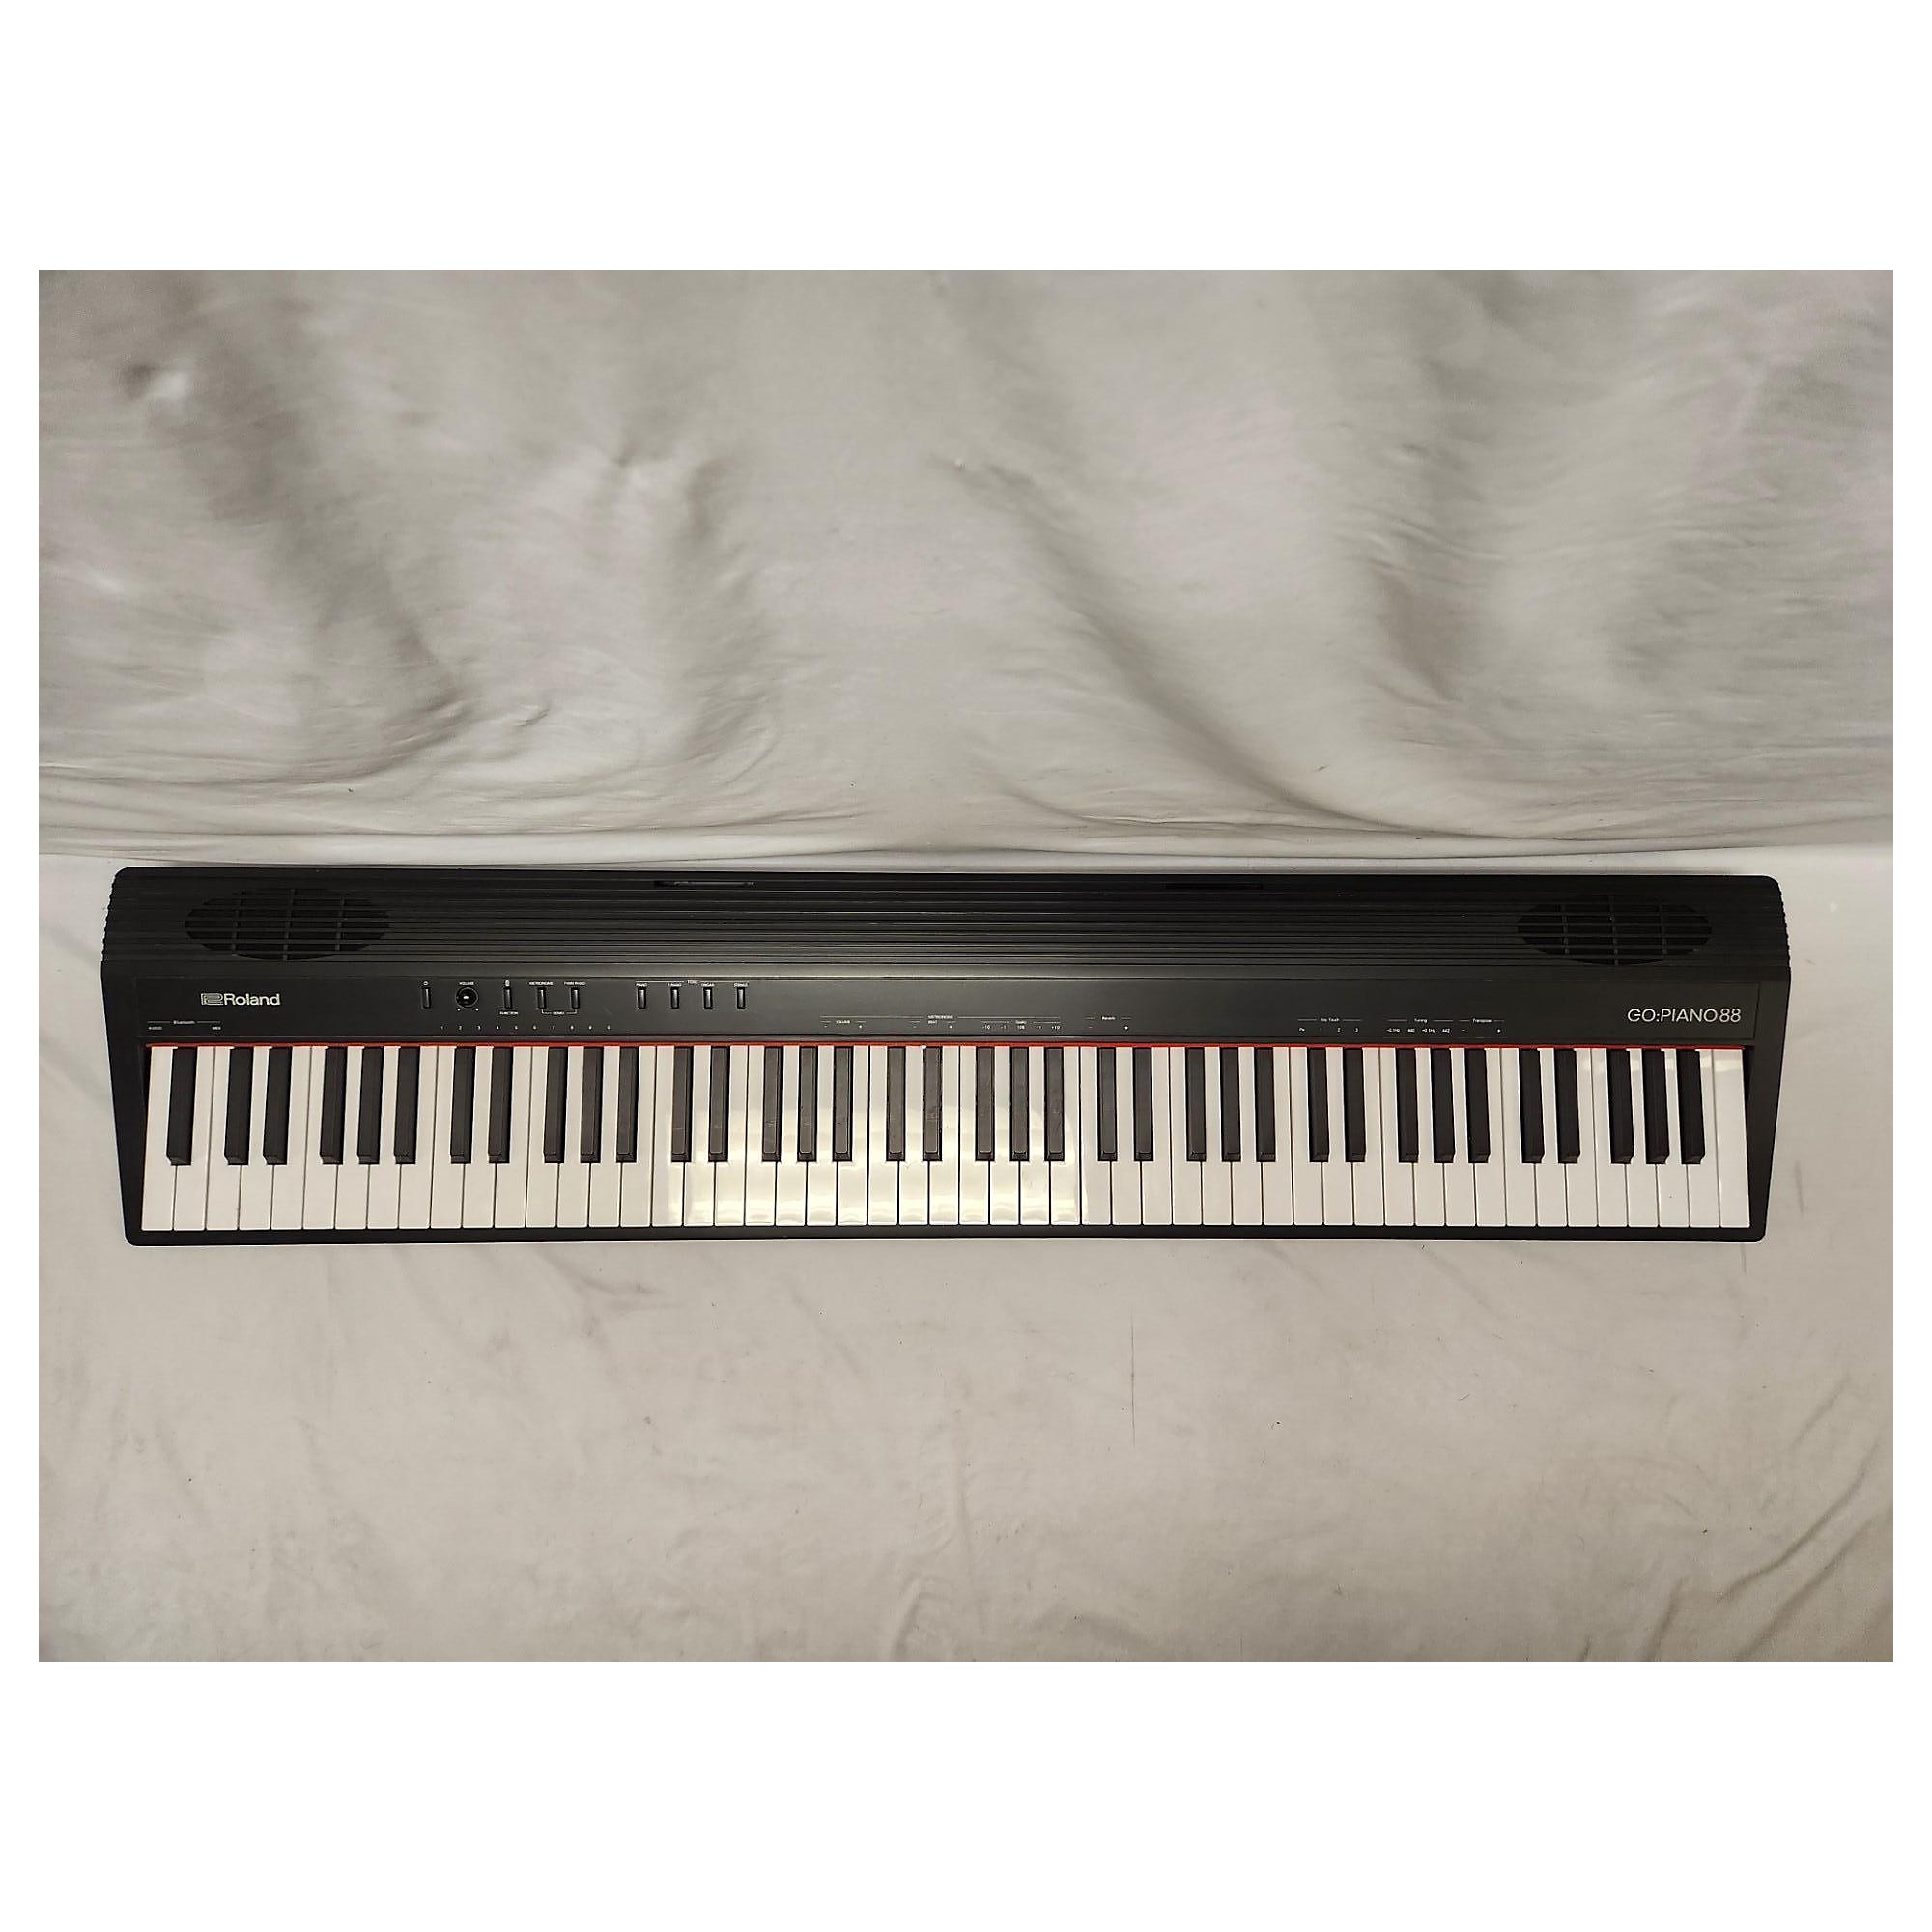 The office Asser ore Used Roland GO:PIANO 88 Digital Piano | Guitar Center